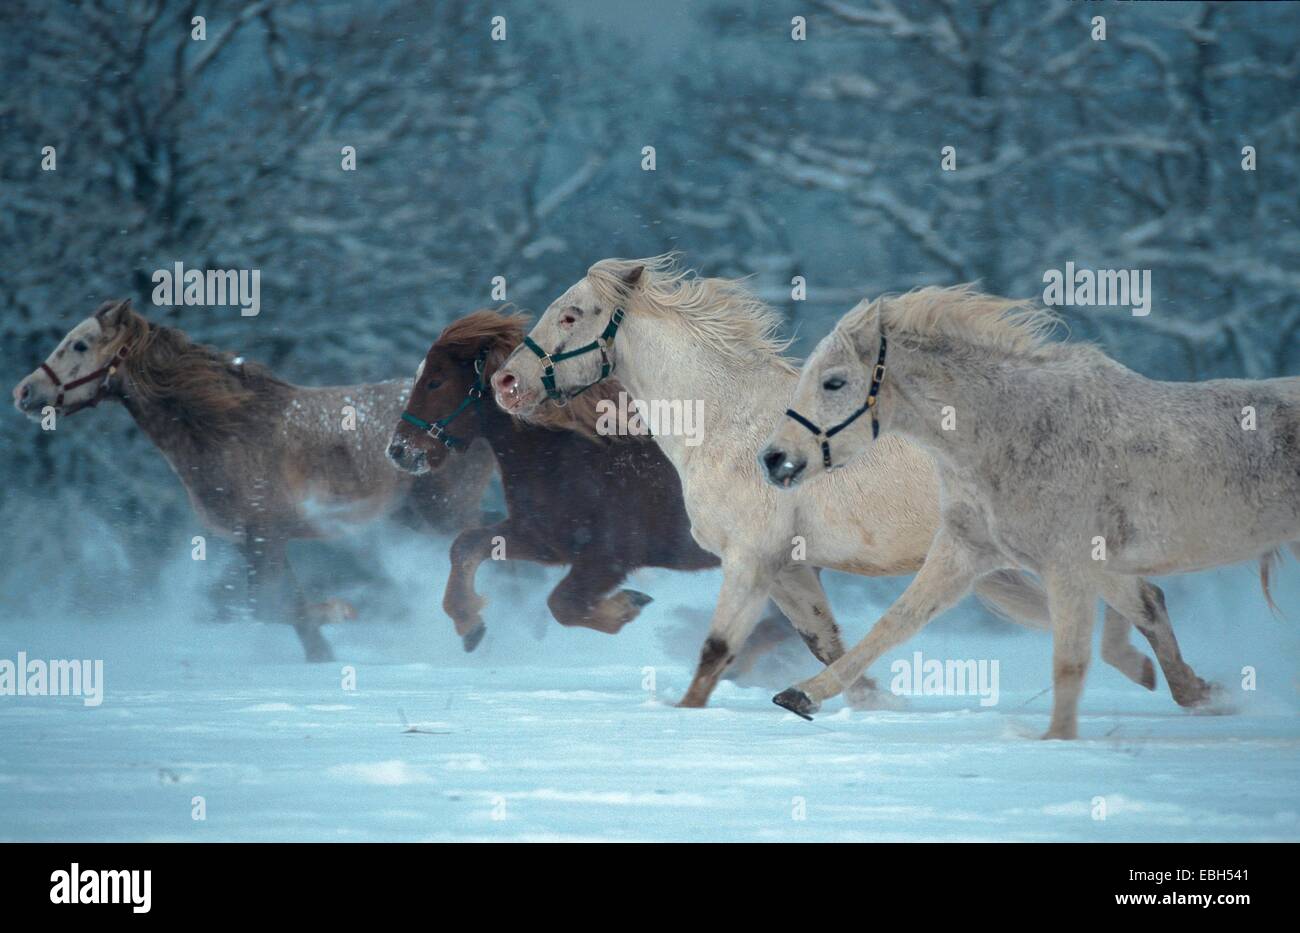 domestic horse (Equus przewalskii f. caballus), running in snow. Stock Photo